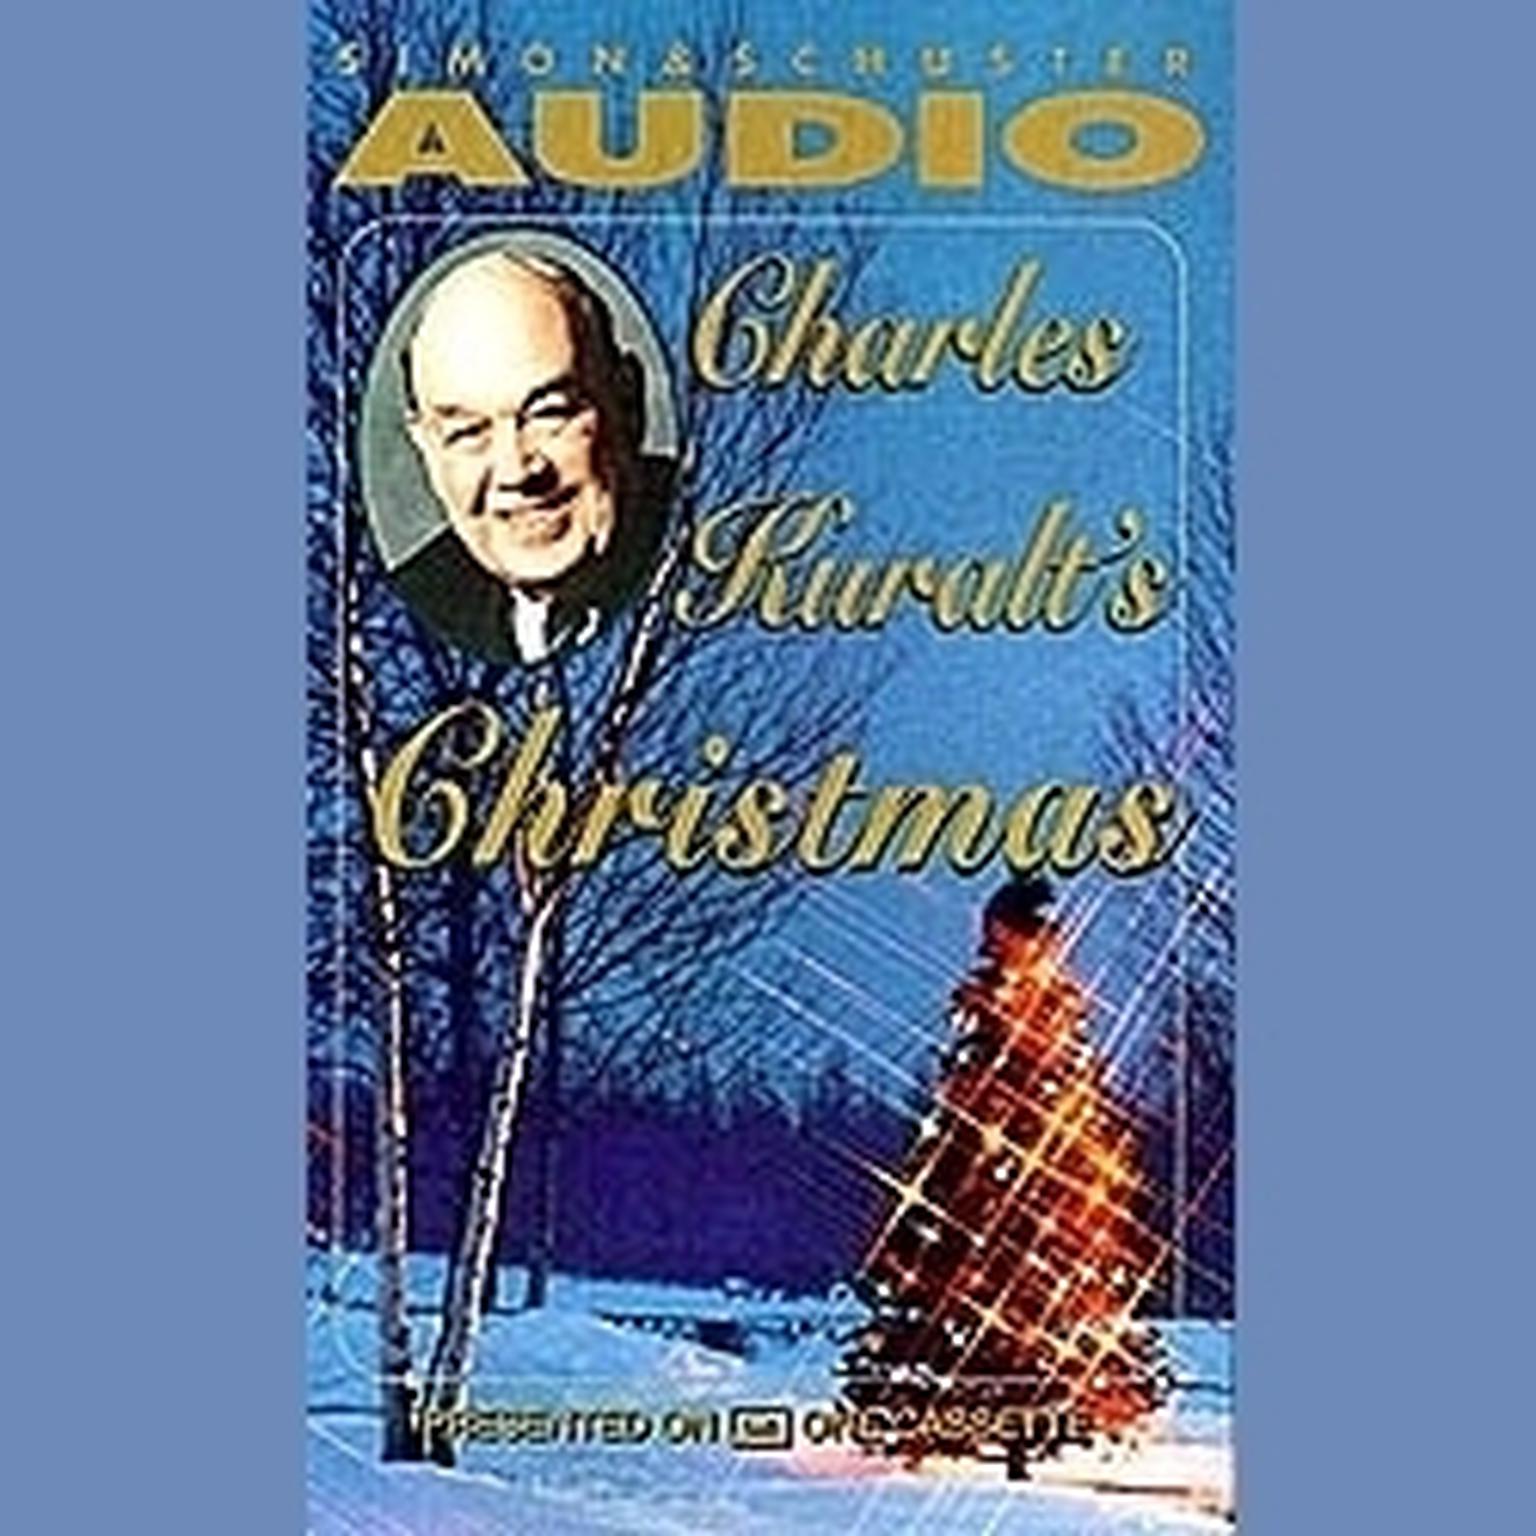 Charles Kuralts Christmas (Abridged) Audiobook, by Charles Kuralt